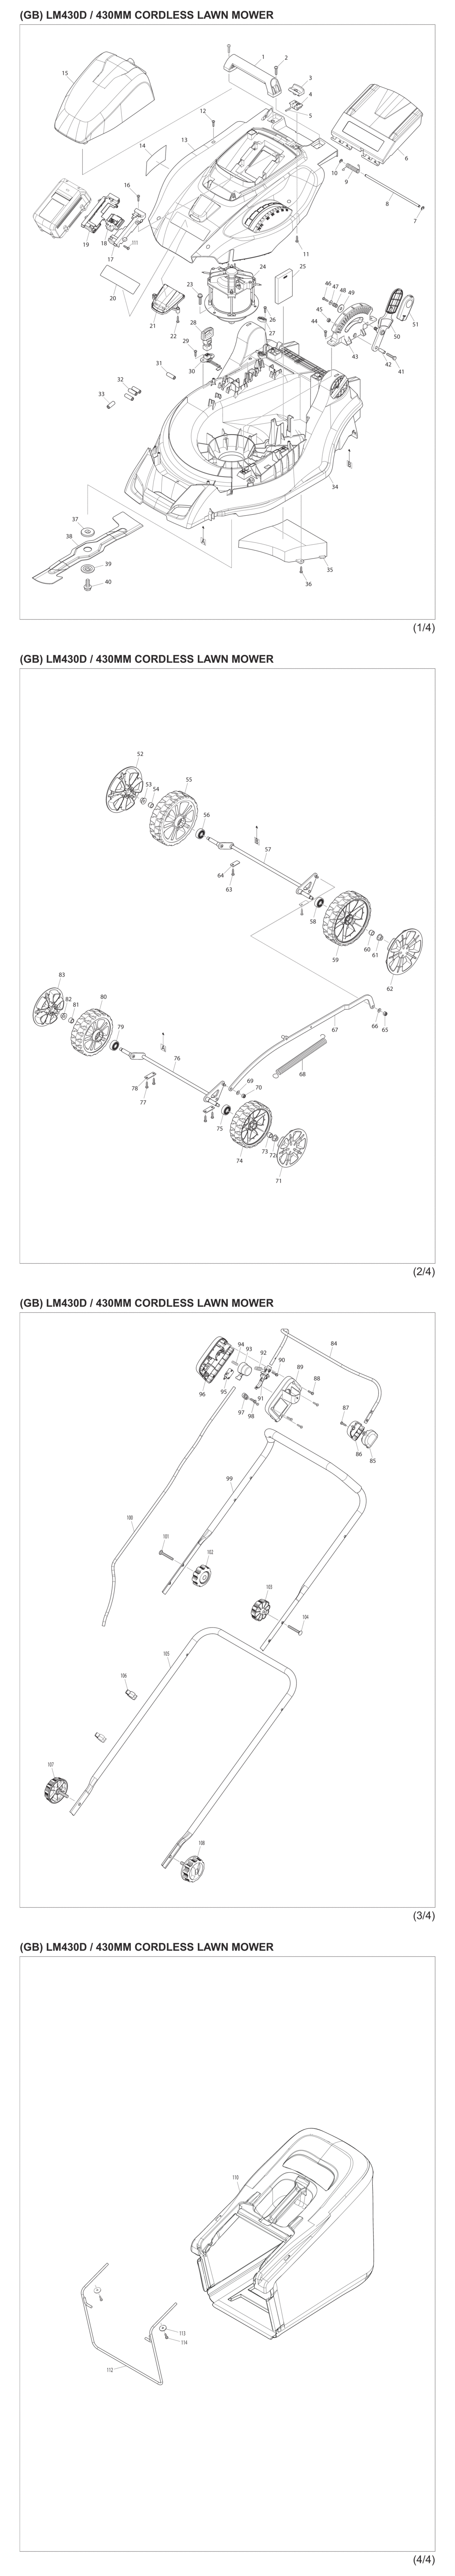 Makita LM430DZ Cordless Lawn Mower Spare Parts